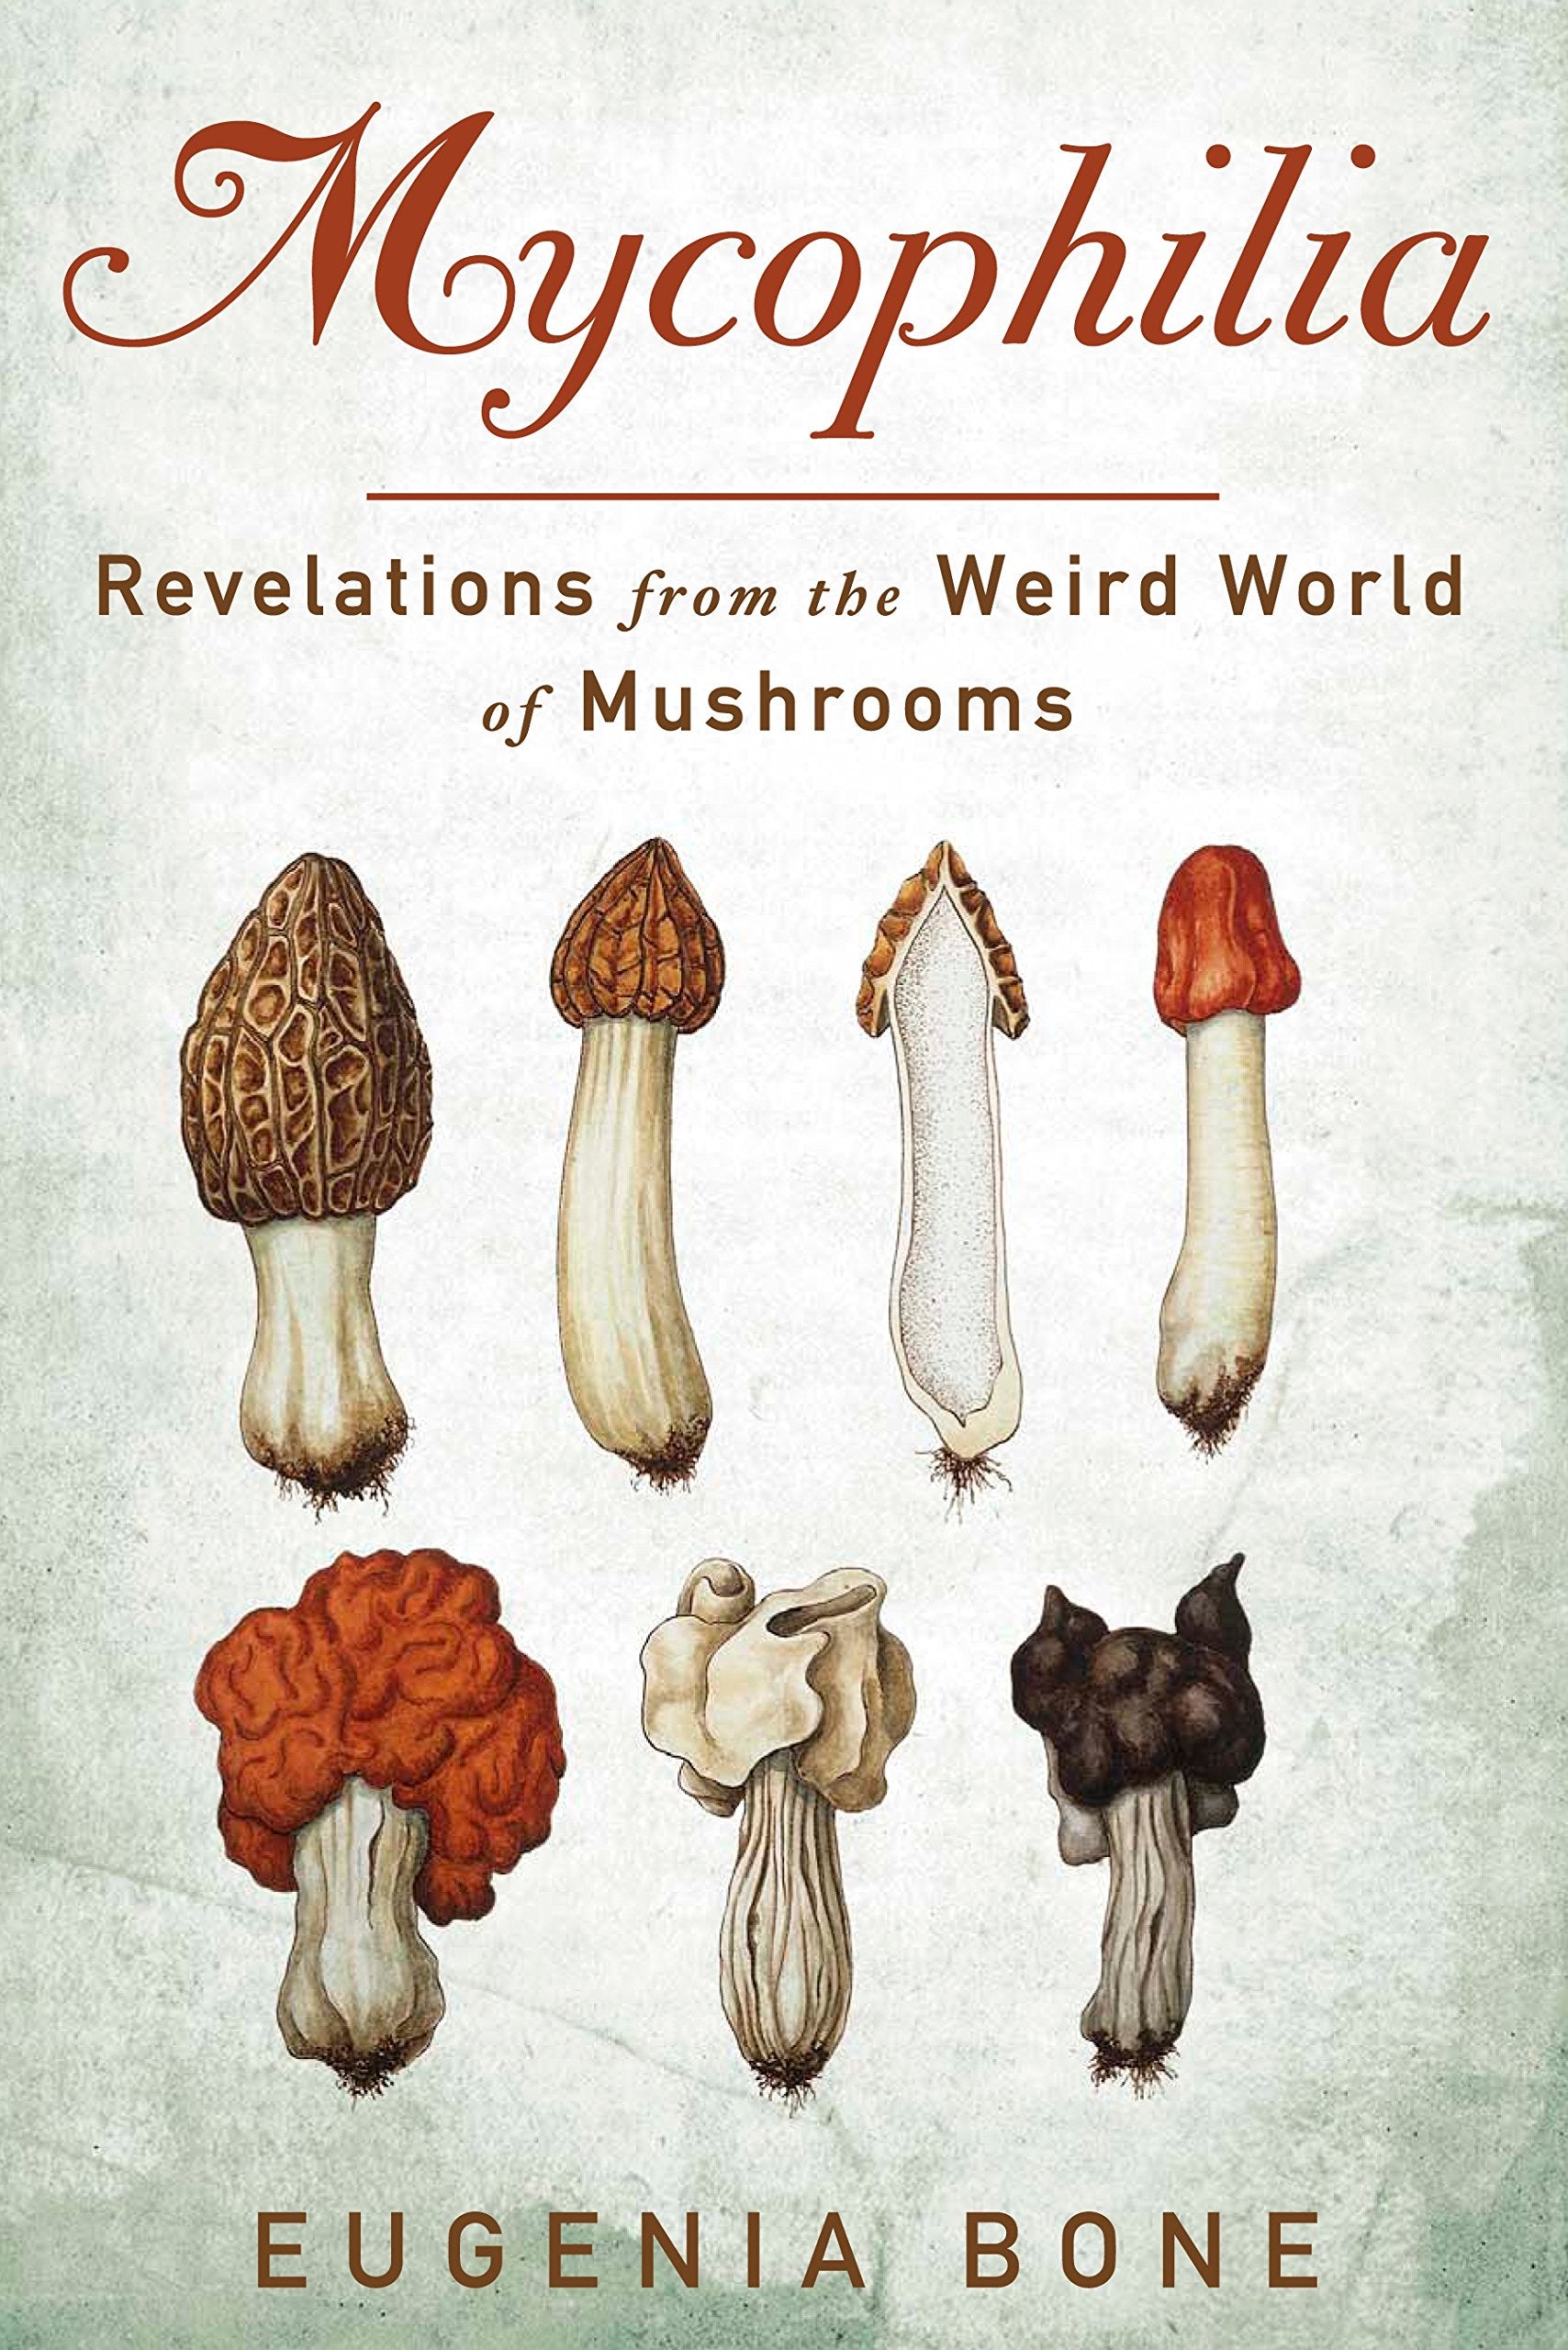 Mycophilia: revelations from the Weird World of Mushrooms (Eugenia Bone)